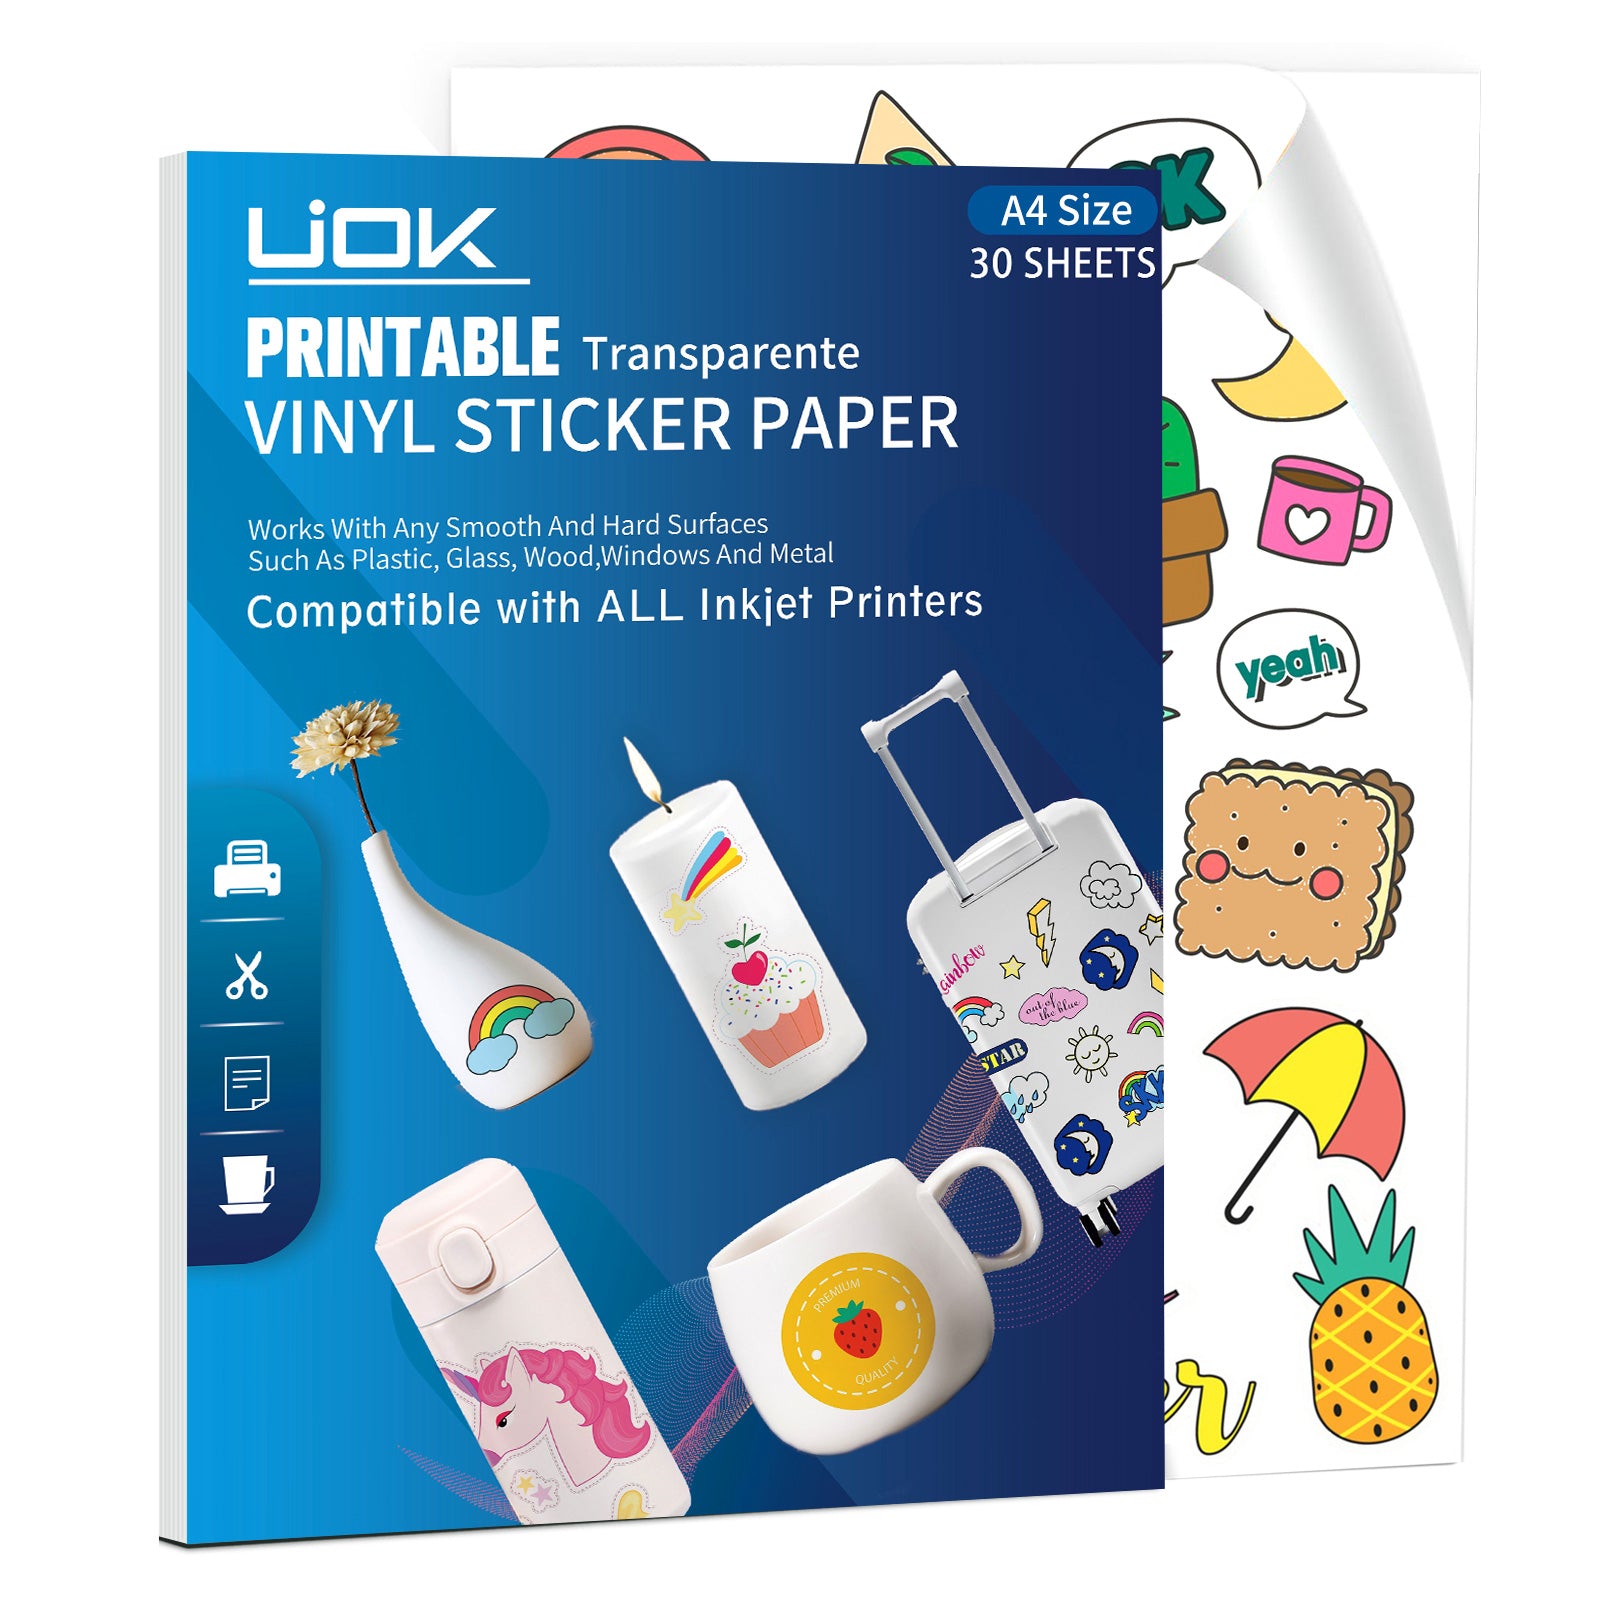 Printable Vinyl Sticker Paper, Transparent Sticker Paper for Inkjet Printer A4 Clear